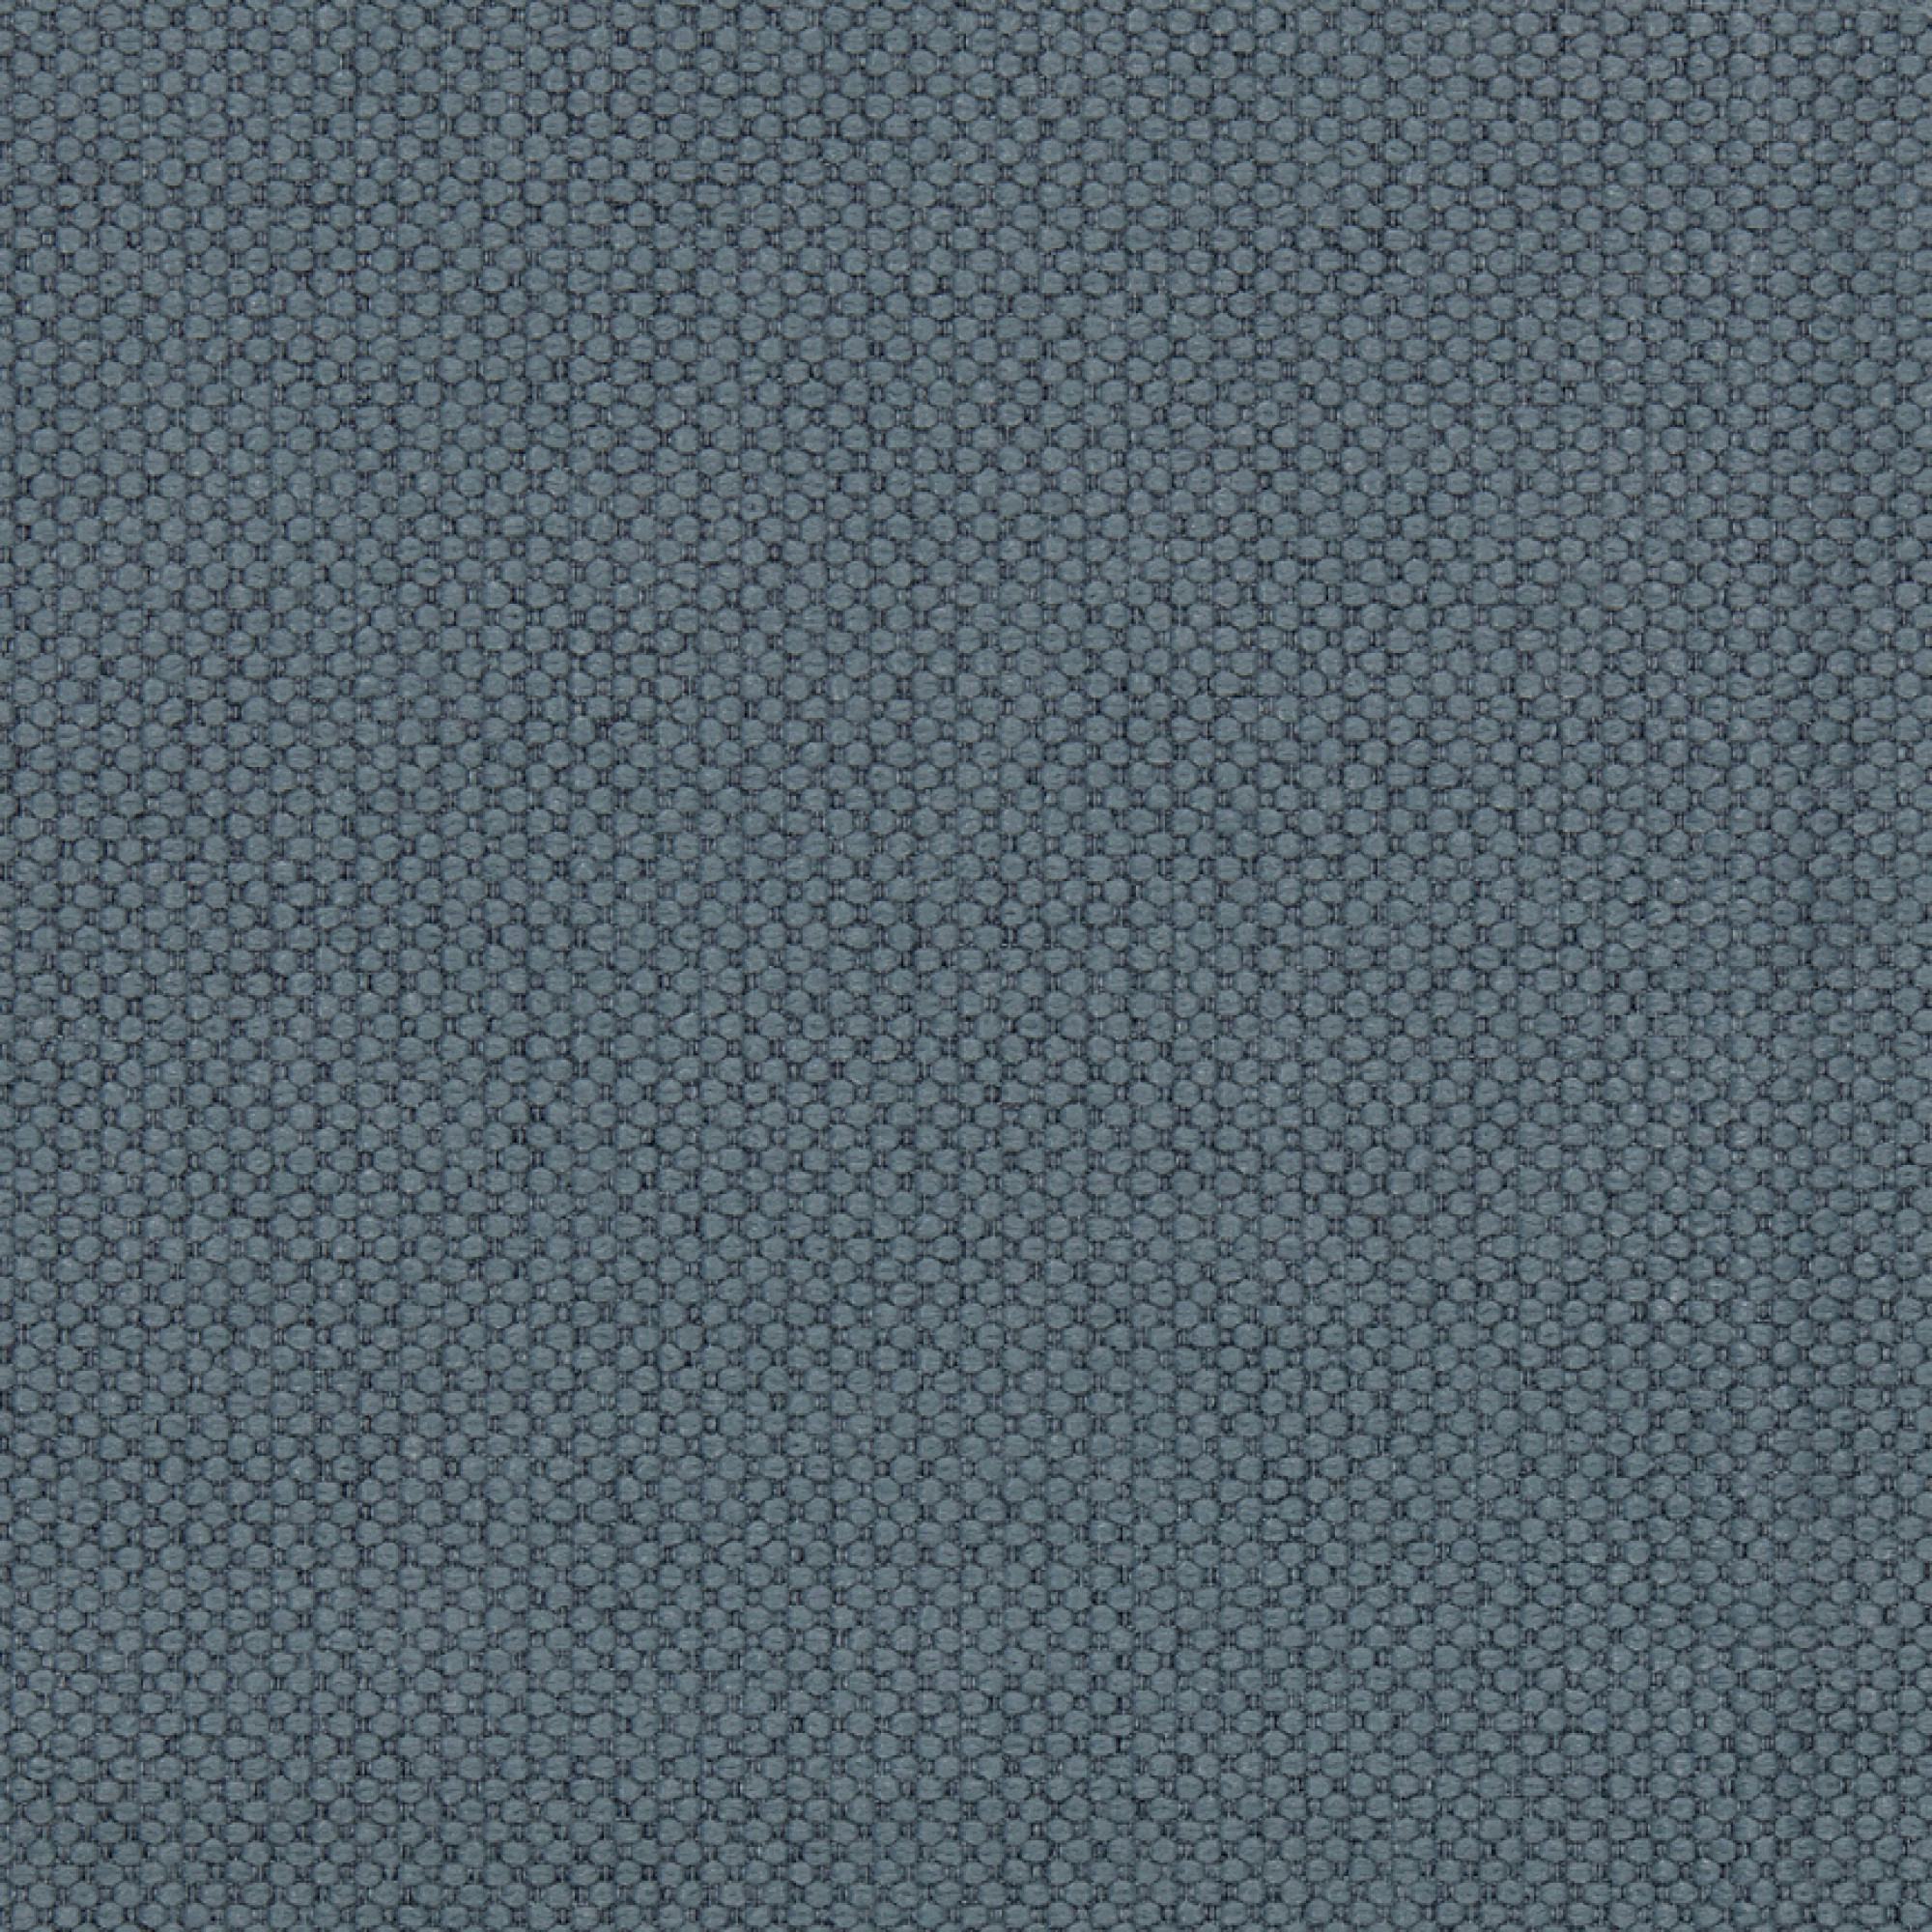 Fabric sample Merit 0012 blue